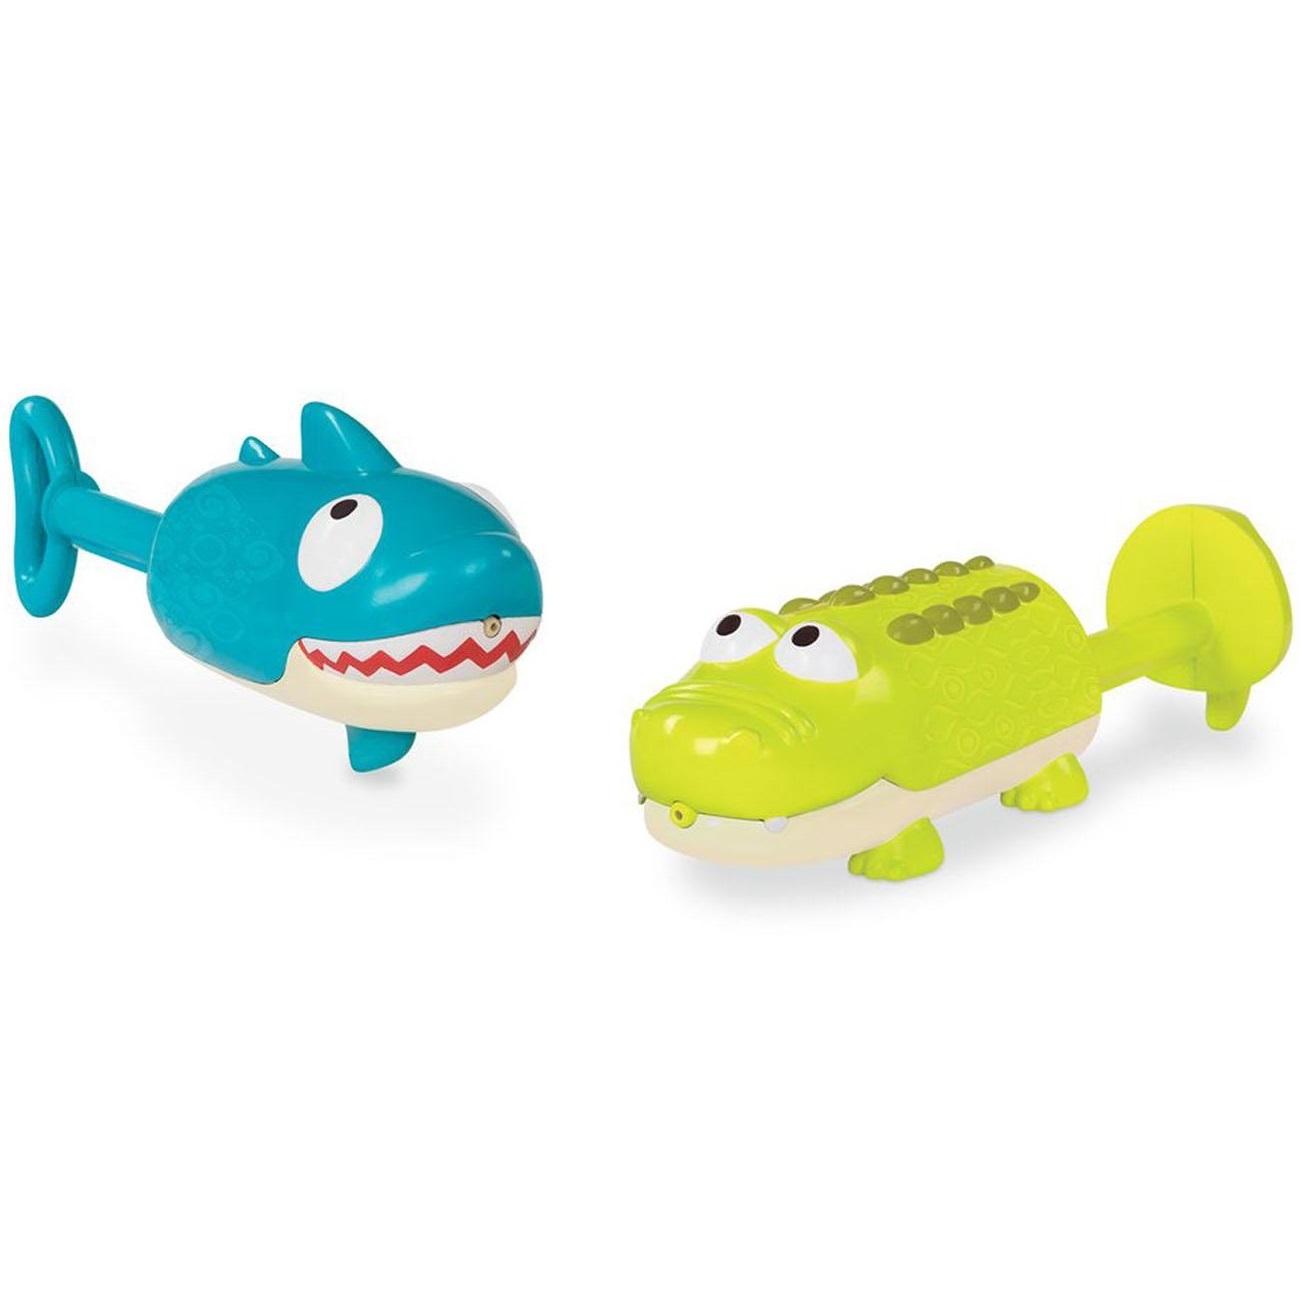 Zestaw dwóch sikawek - Rekin i Krokodyl - B.Toys